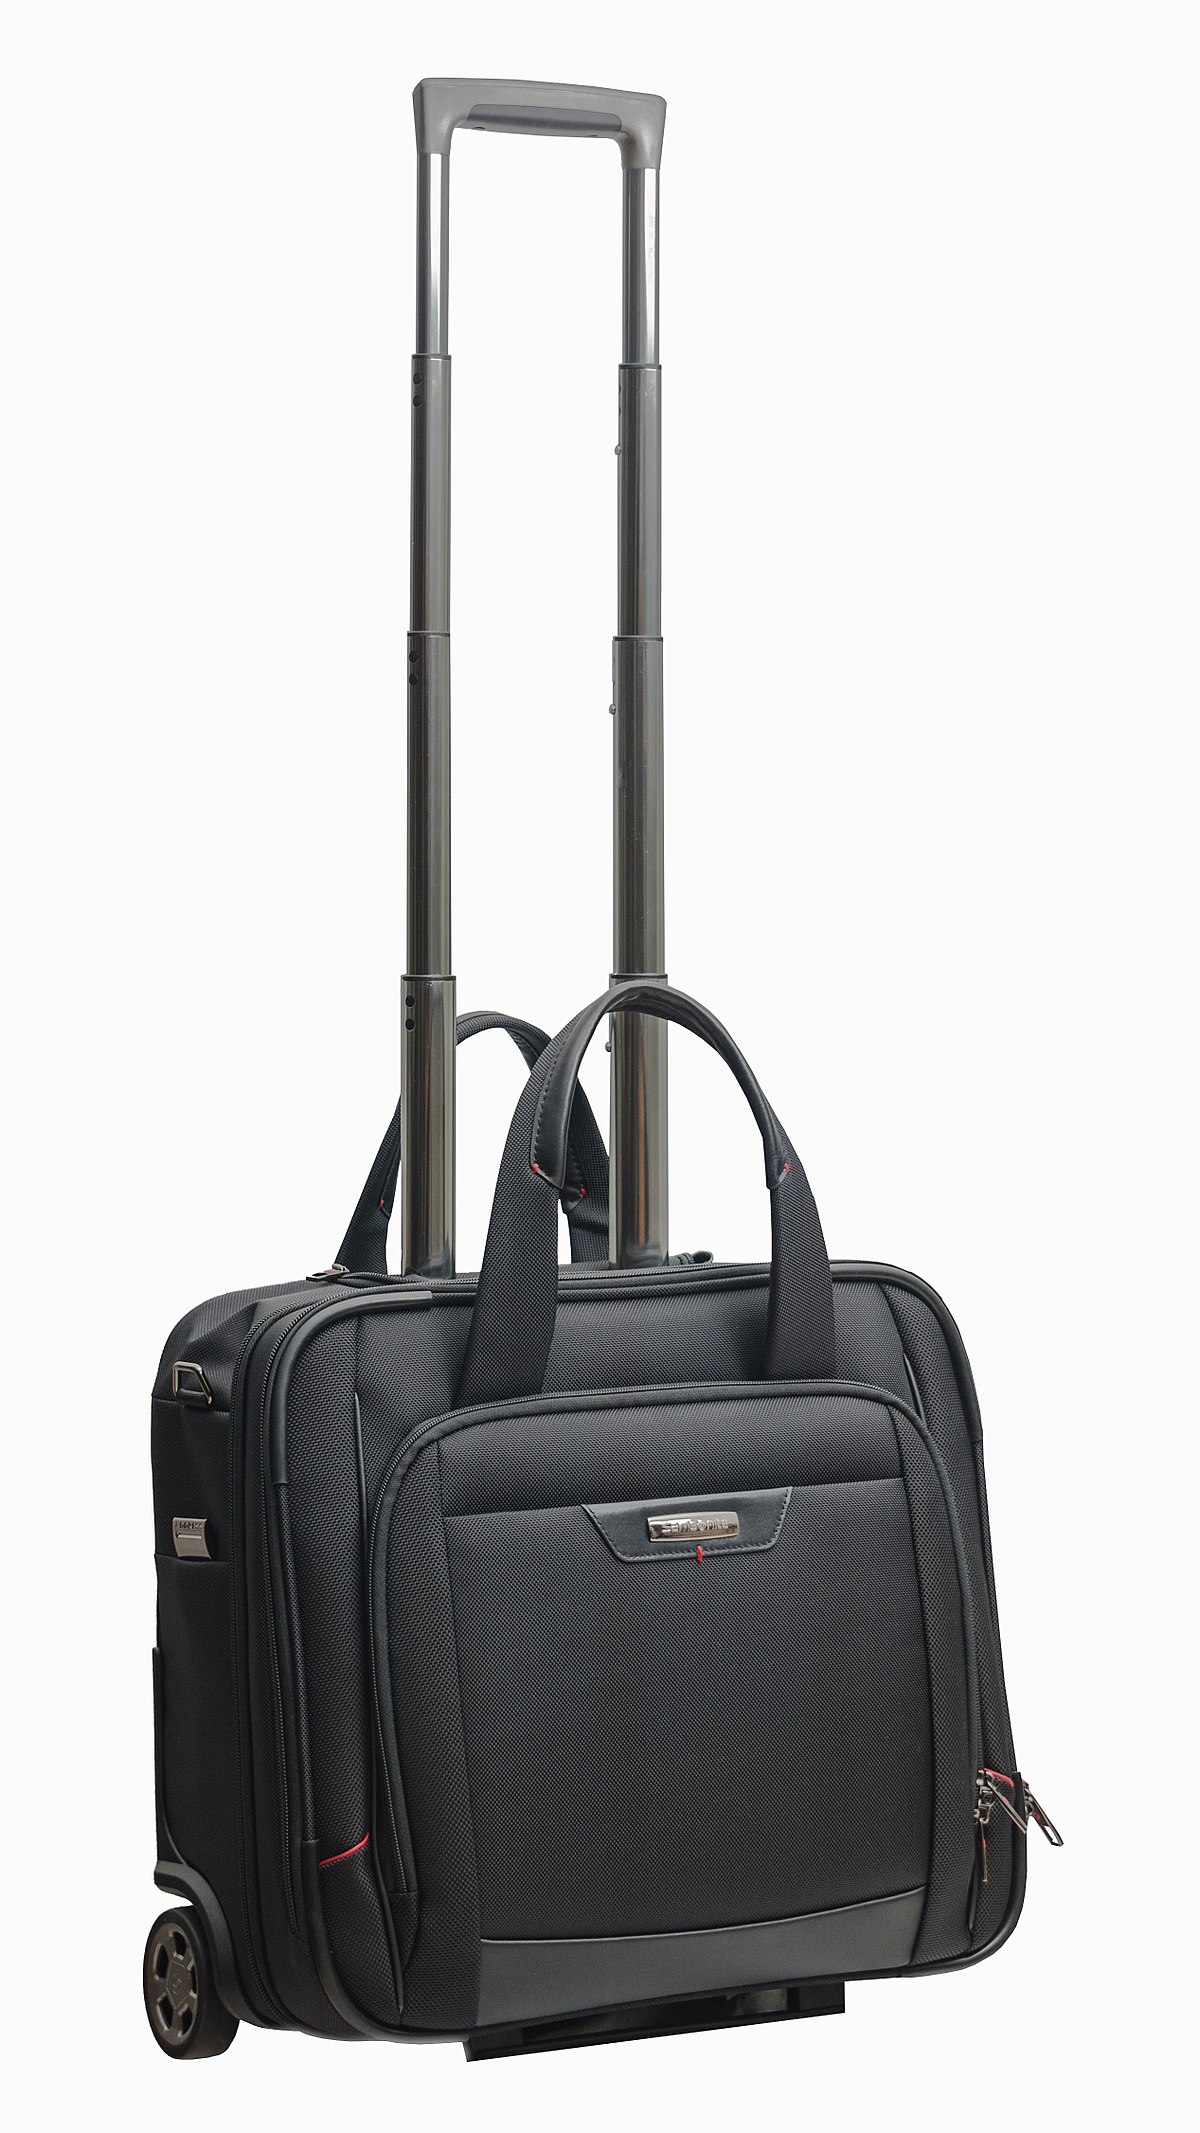 Suitcase - Wikipedia